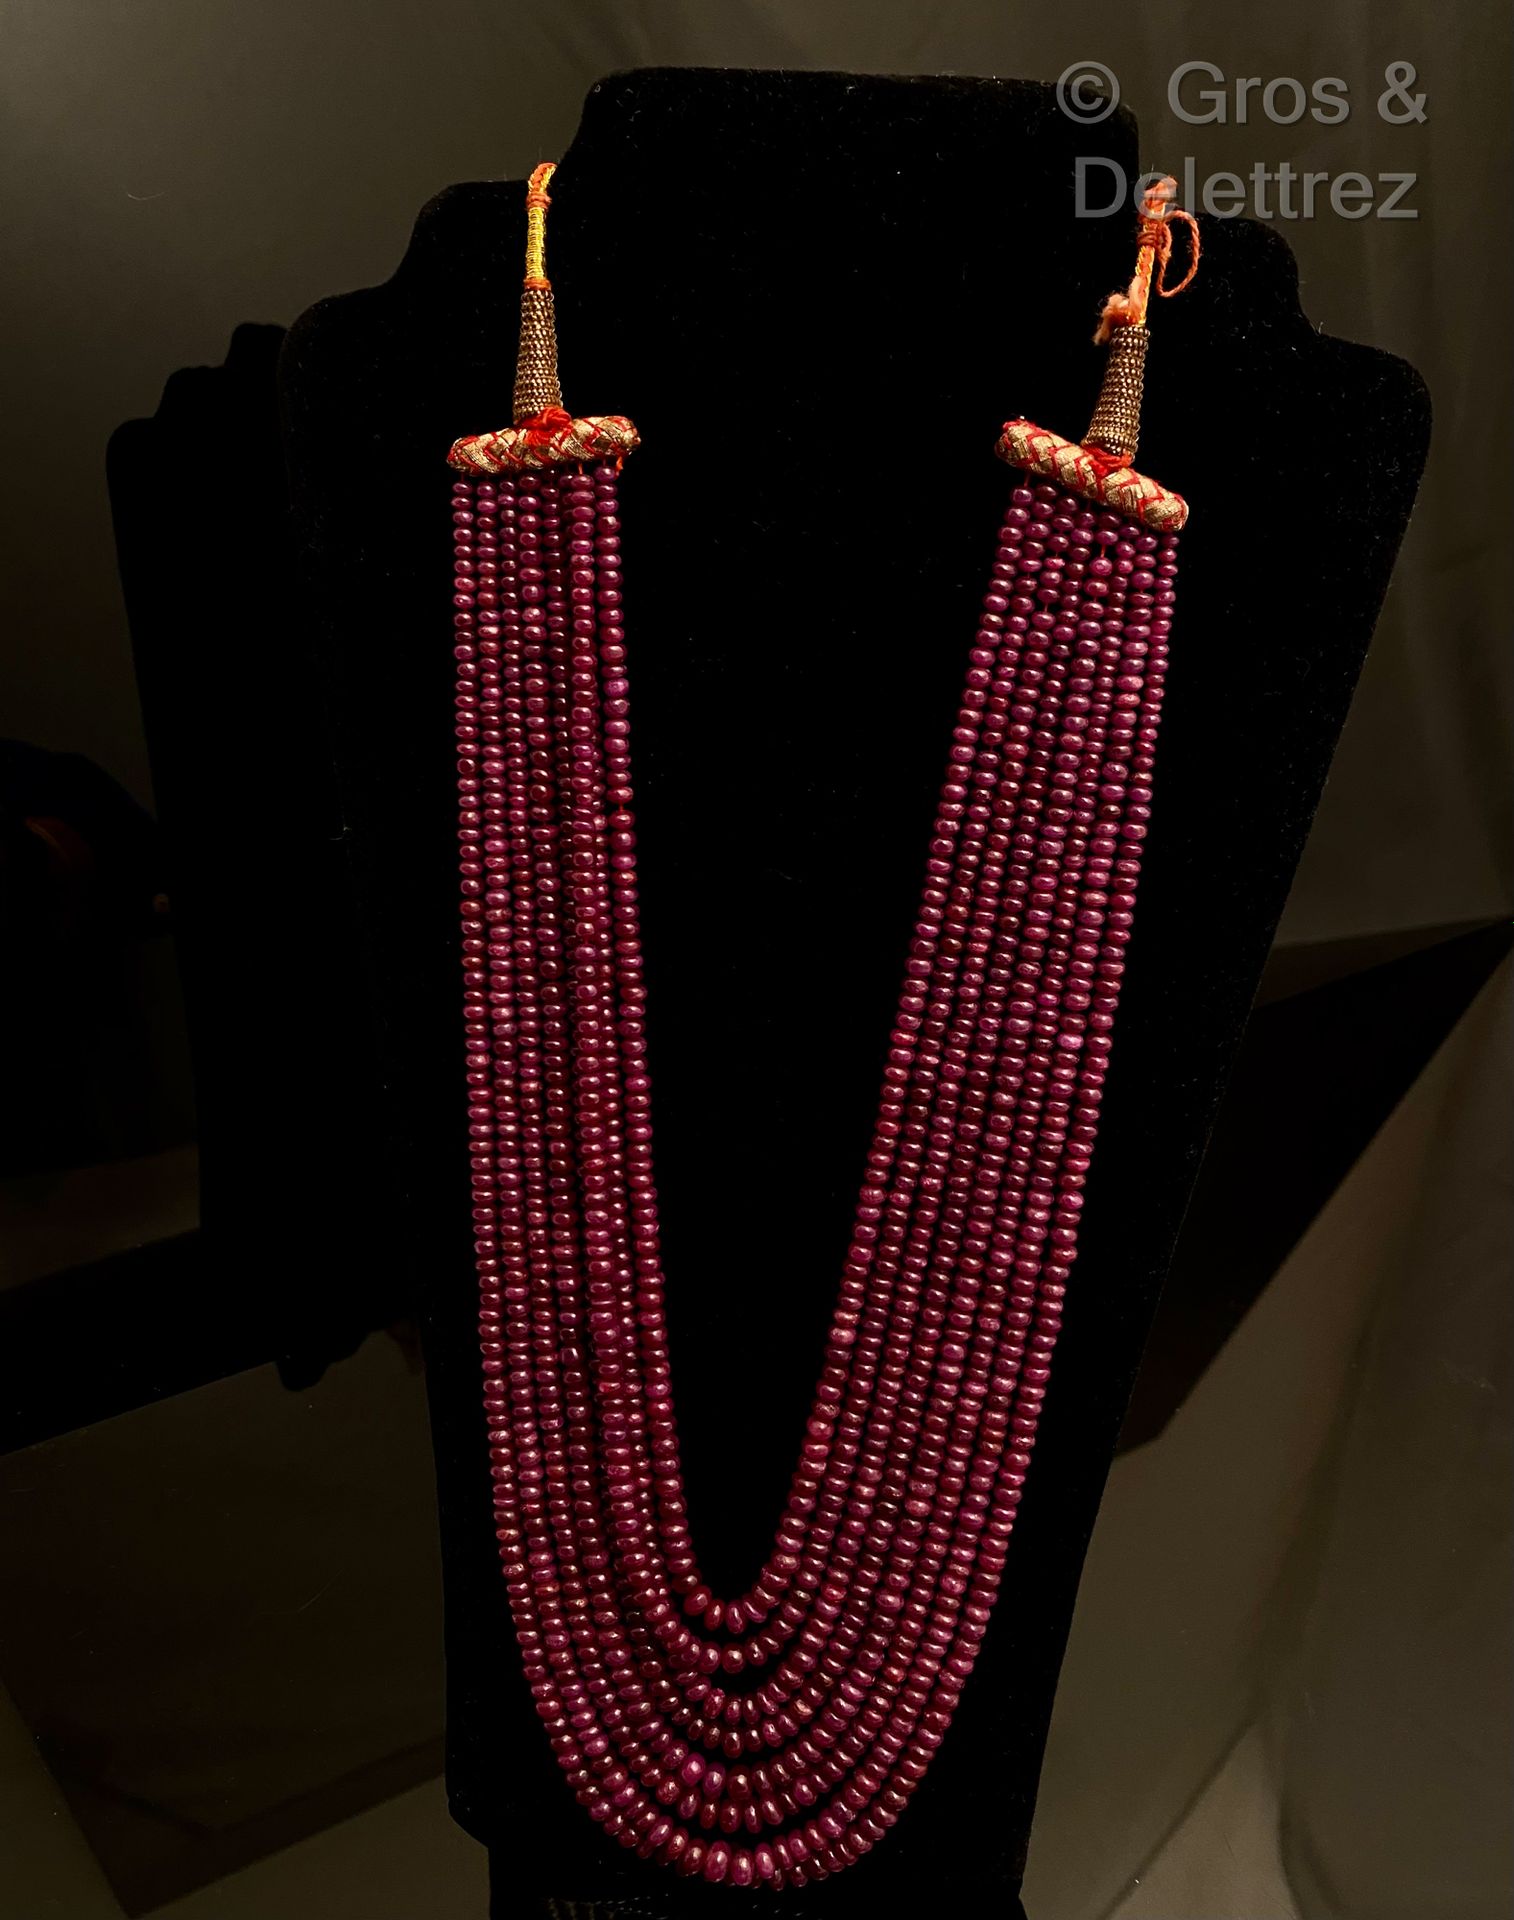 Null Drapery "项链由八排红宝石根部组成，通过滑动的passementerie链接固定在一起。印度的工作。